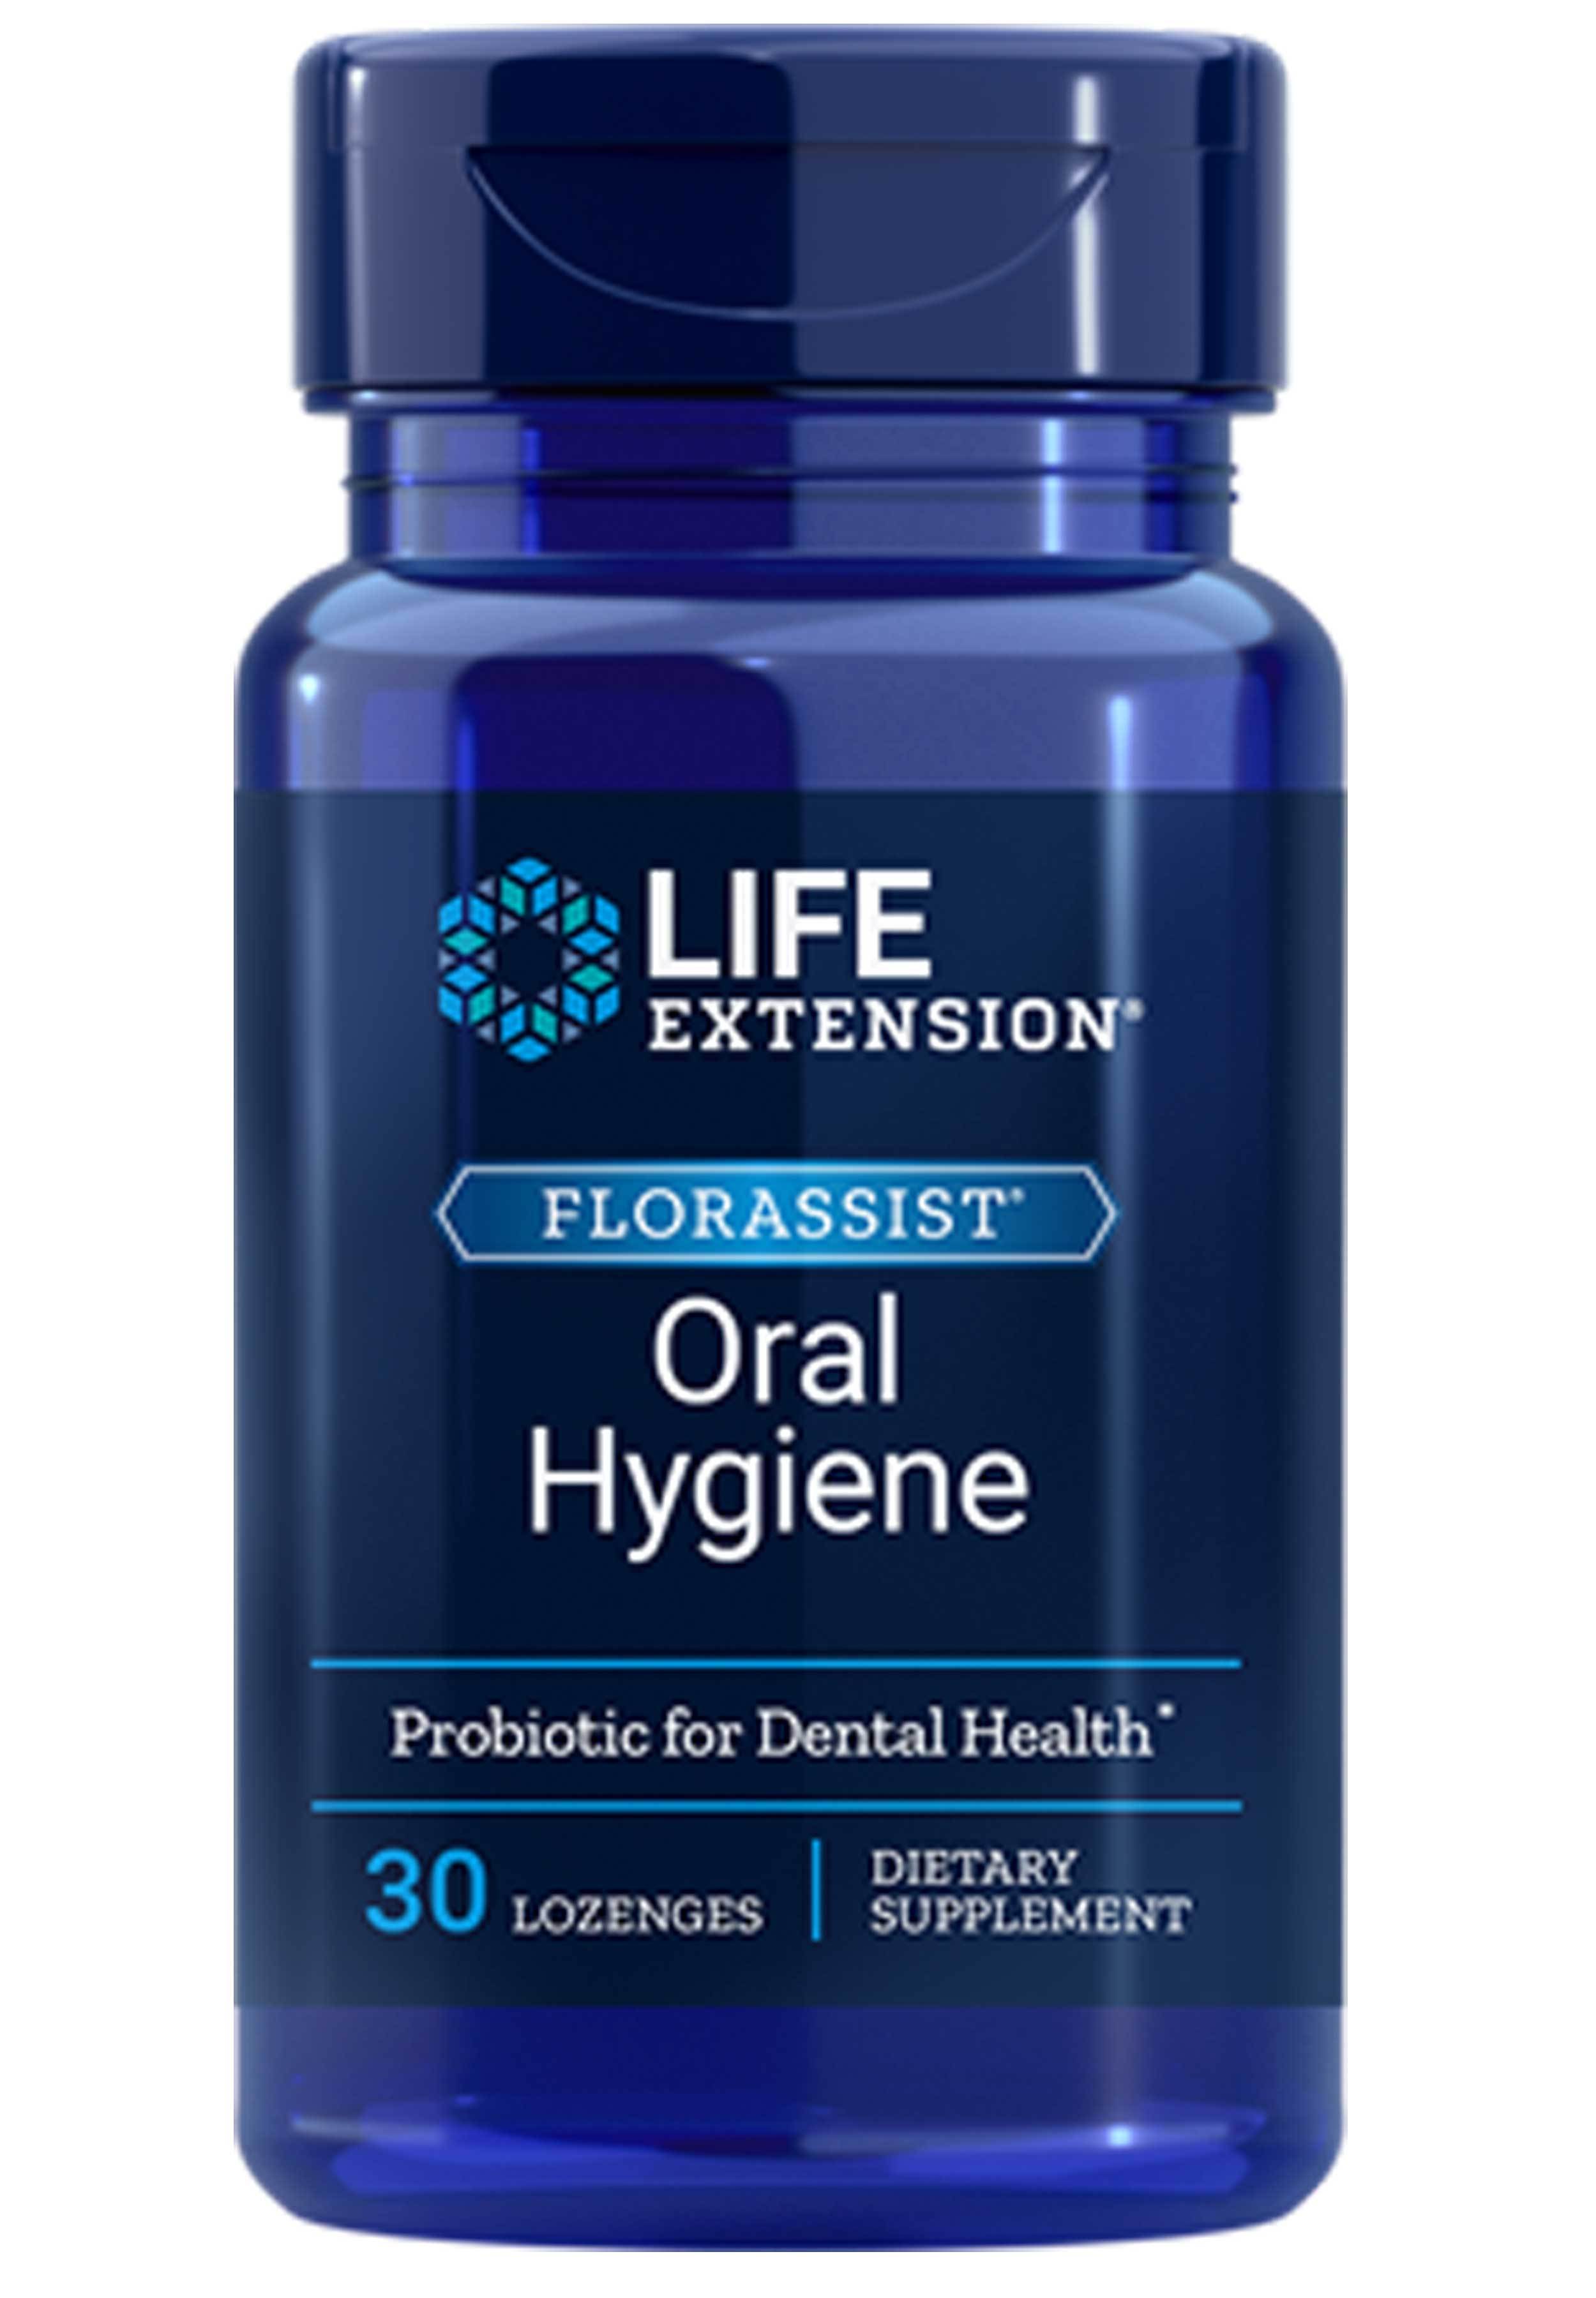 Life Extension FLORASSIST Oral Hygiene